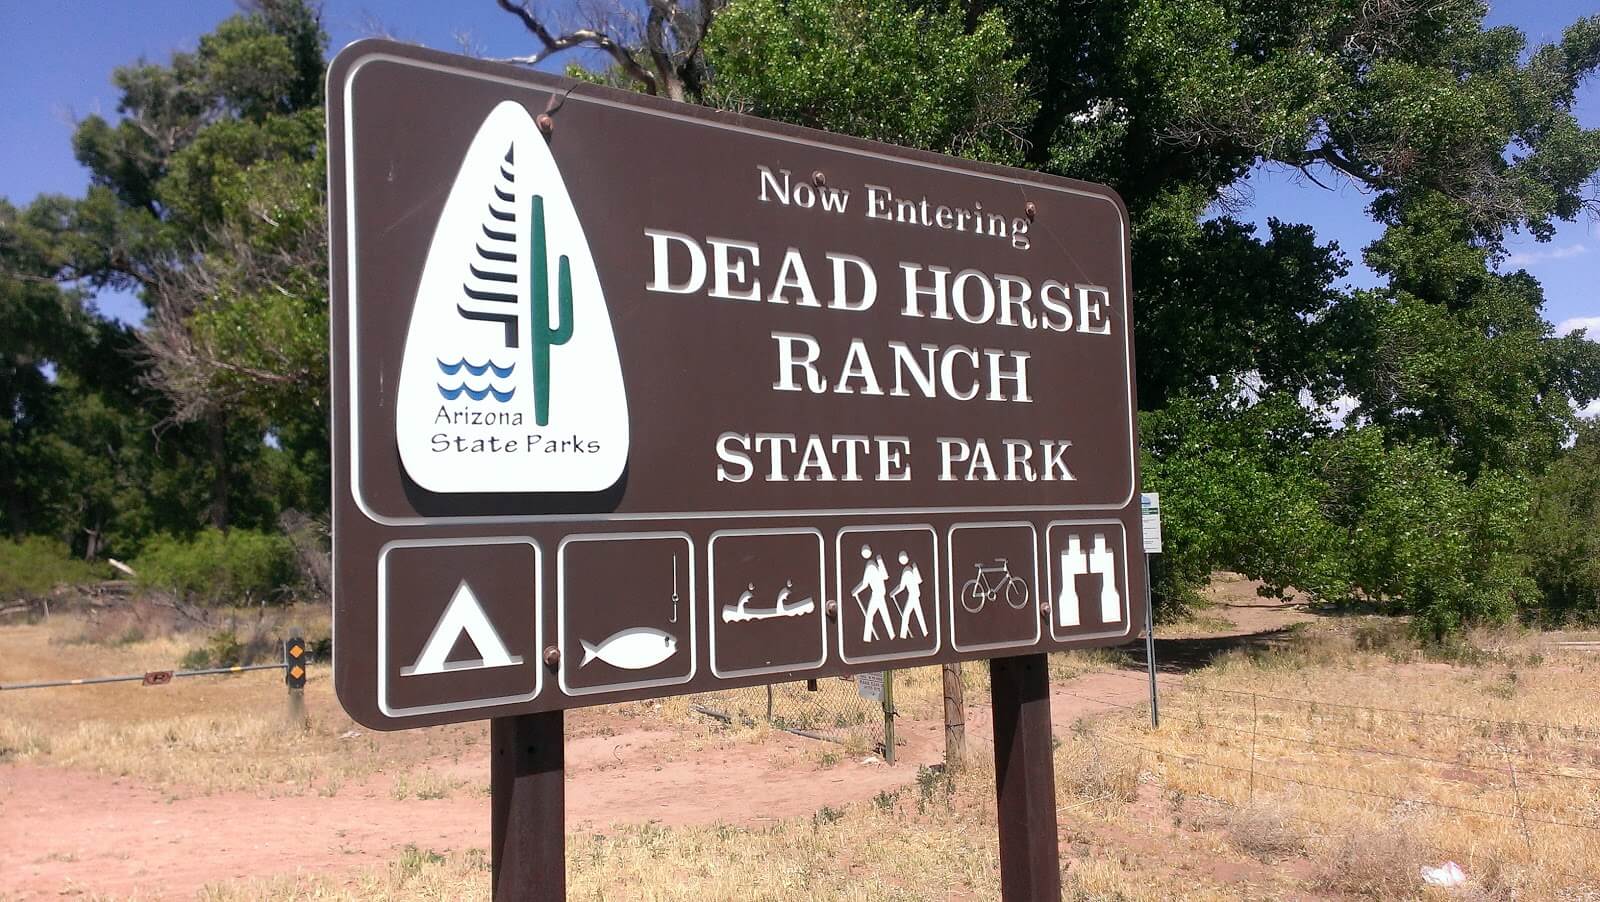 Dead Horse Ranch State Park sign
1.bp.blogspot.com